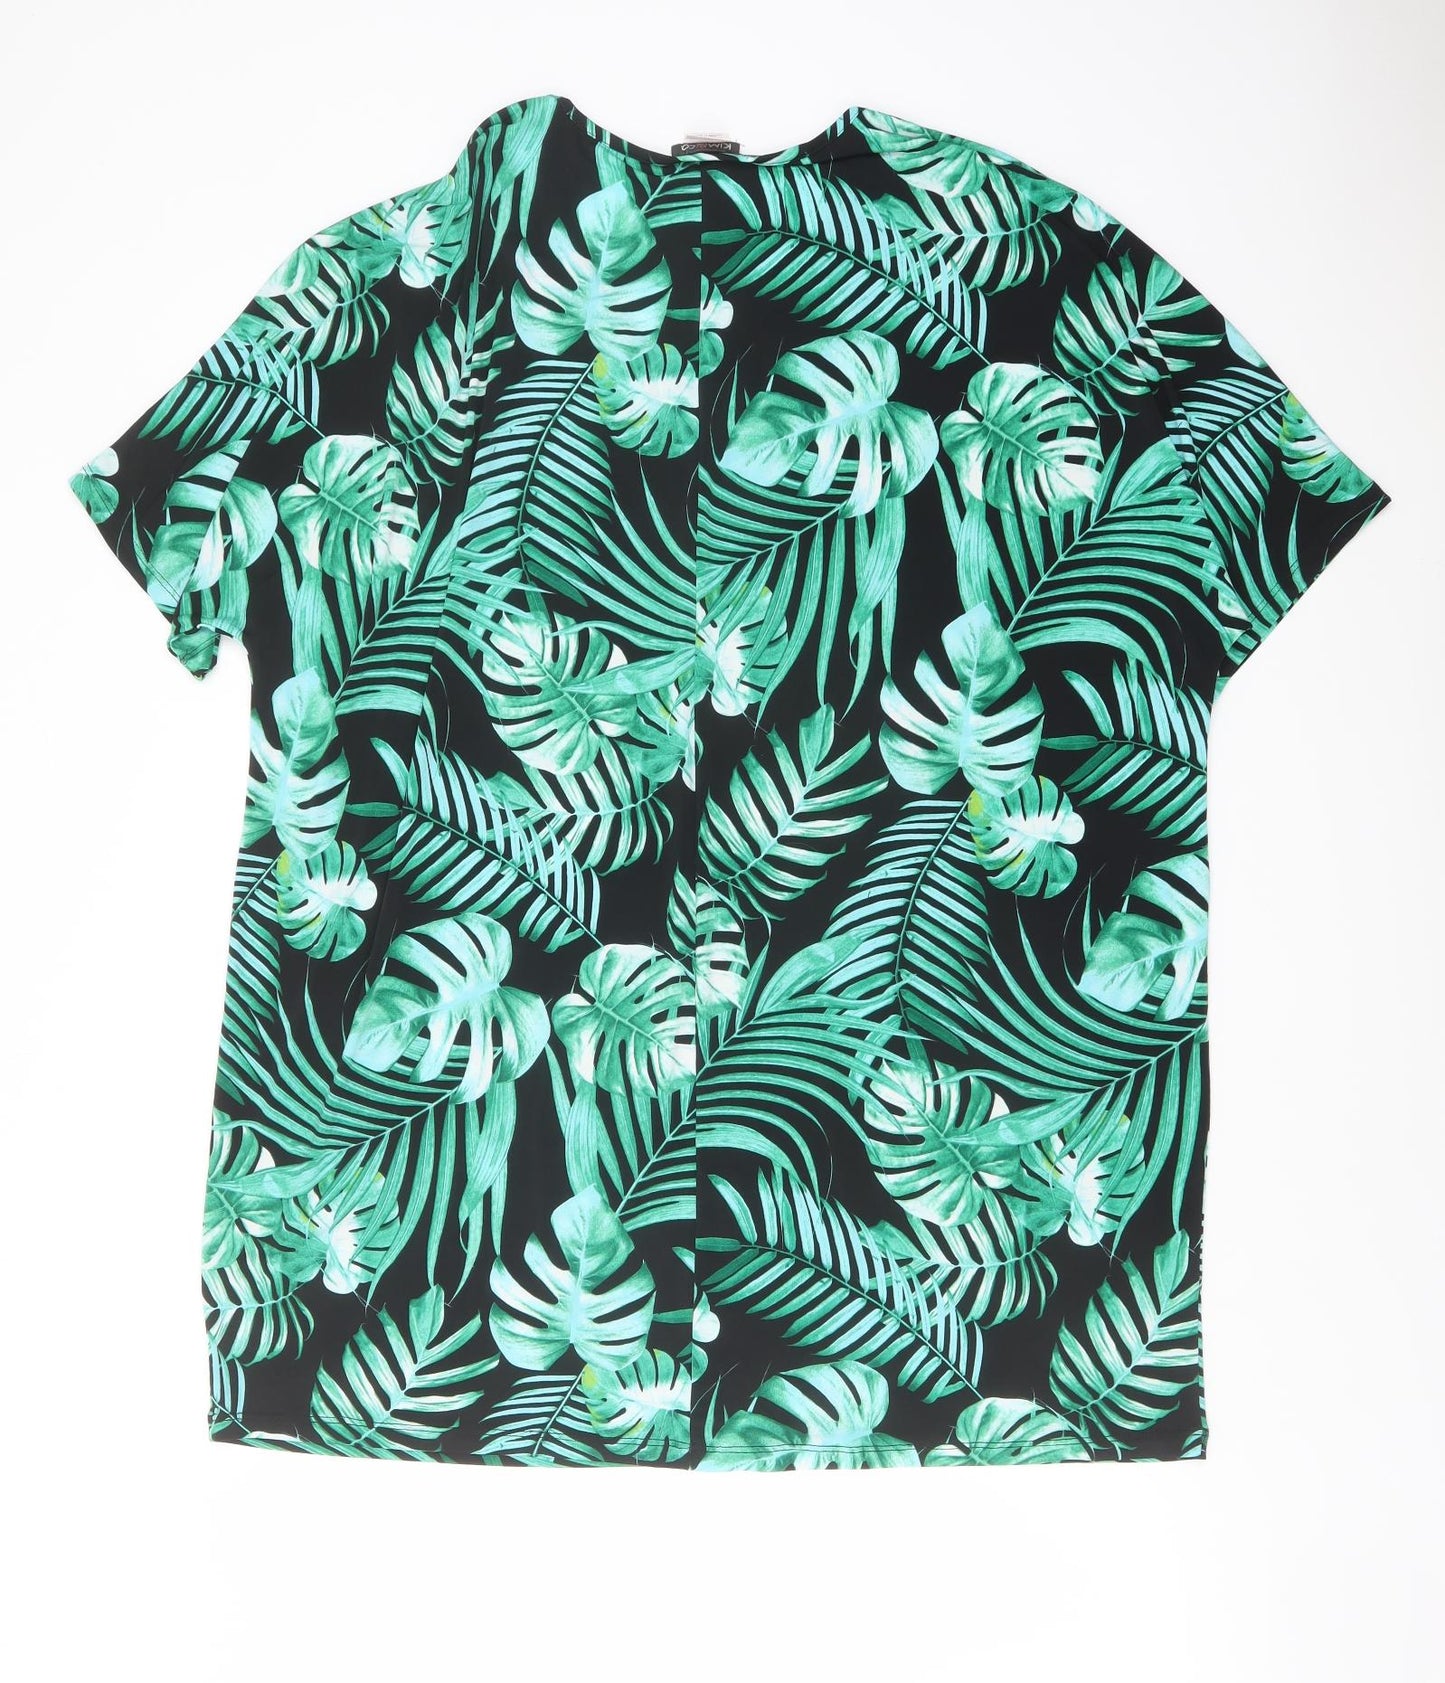 Kim & Co. Womens Green Geometric Polyester Basic T-Shirt Size 2XL Round Neck - Leaf Pattern